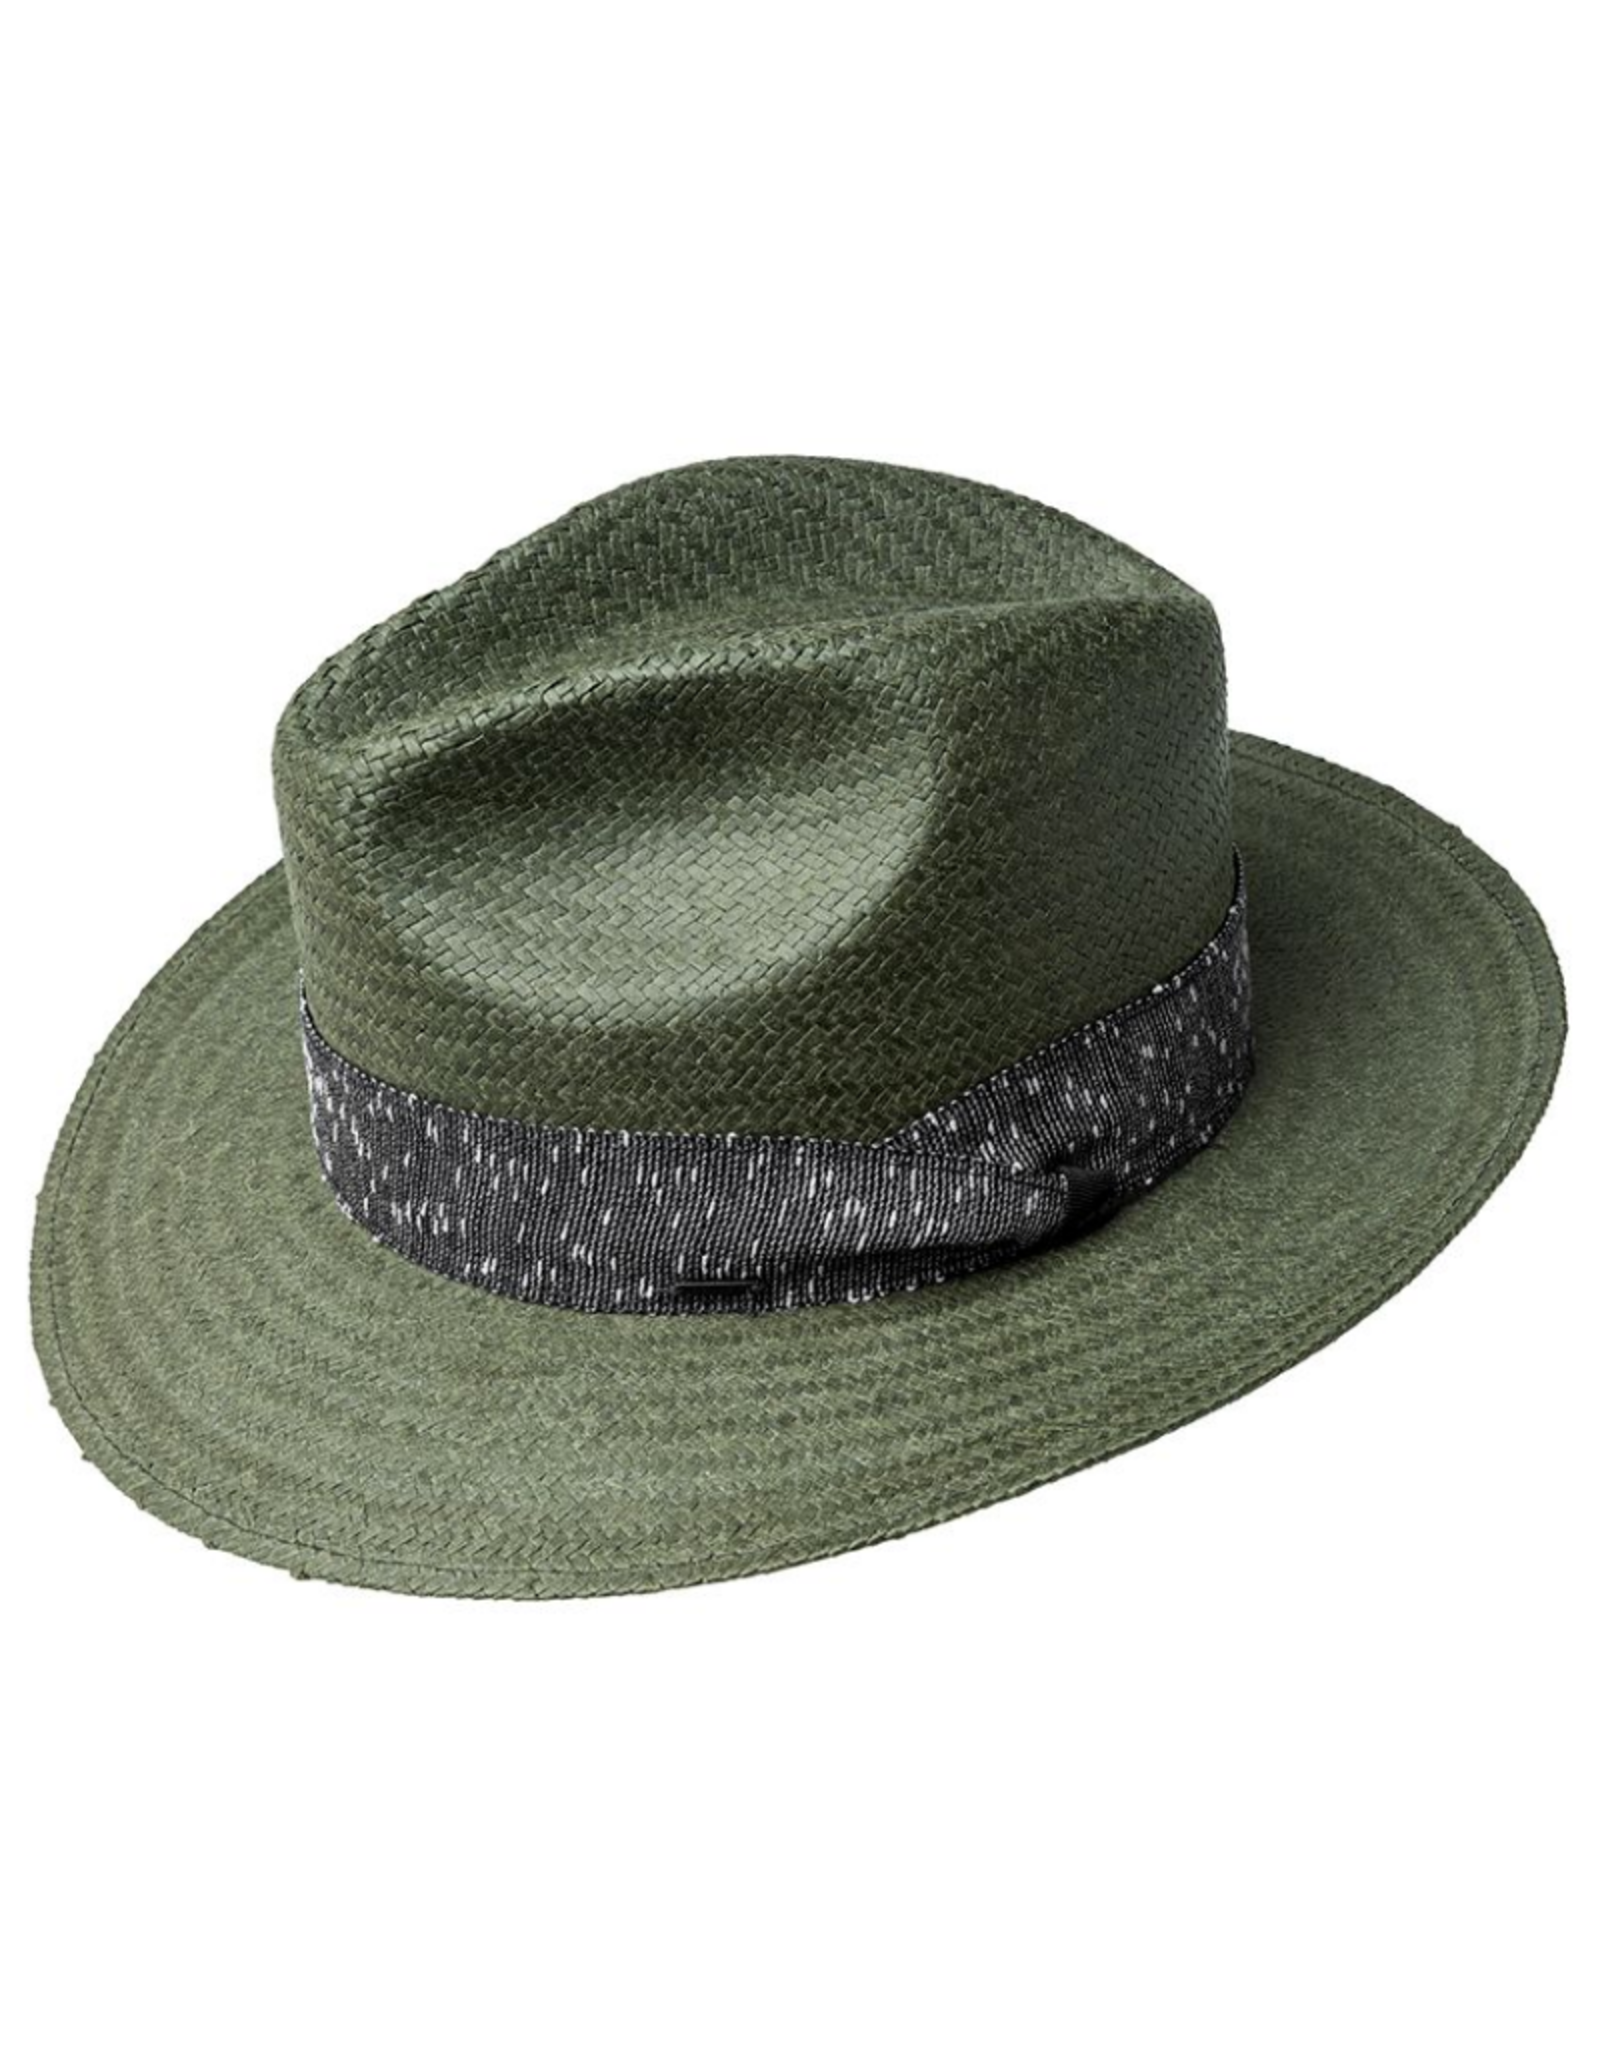 Bailey Hat Co. HAT-FEDORA "ORSUN"